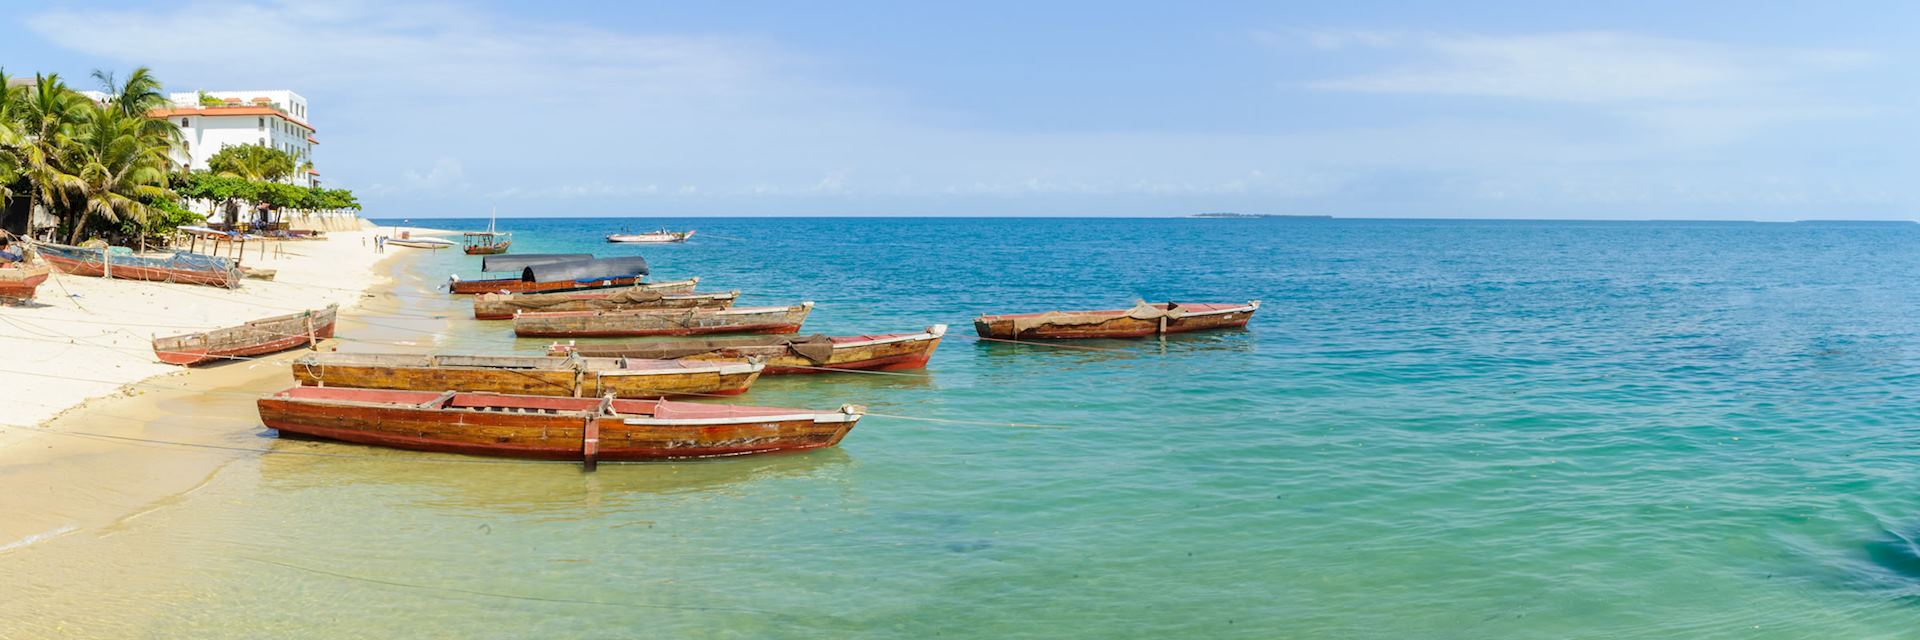 Boats on Tanzania's Swahili Coast